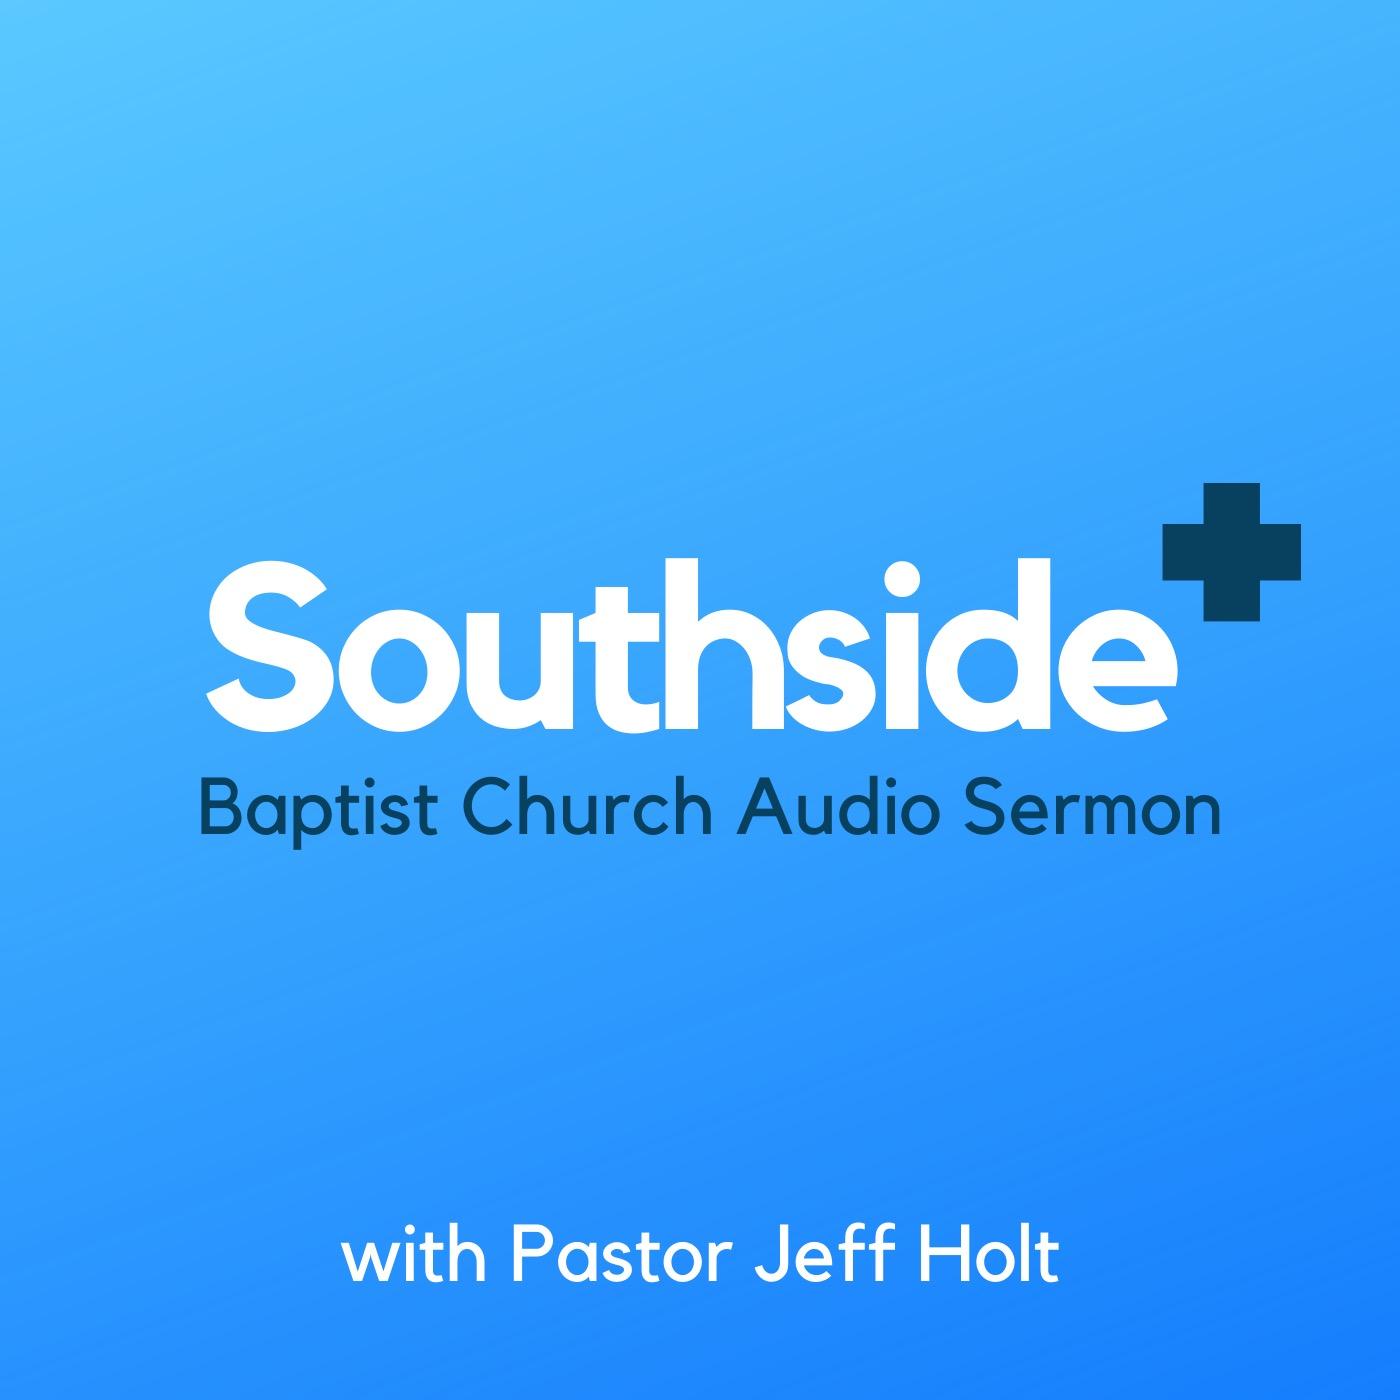 Southside Baptist Curch of Stillwater Audio Sermon